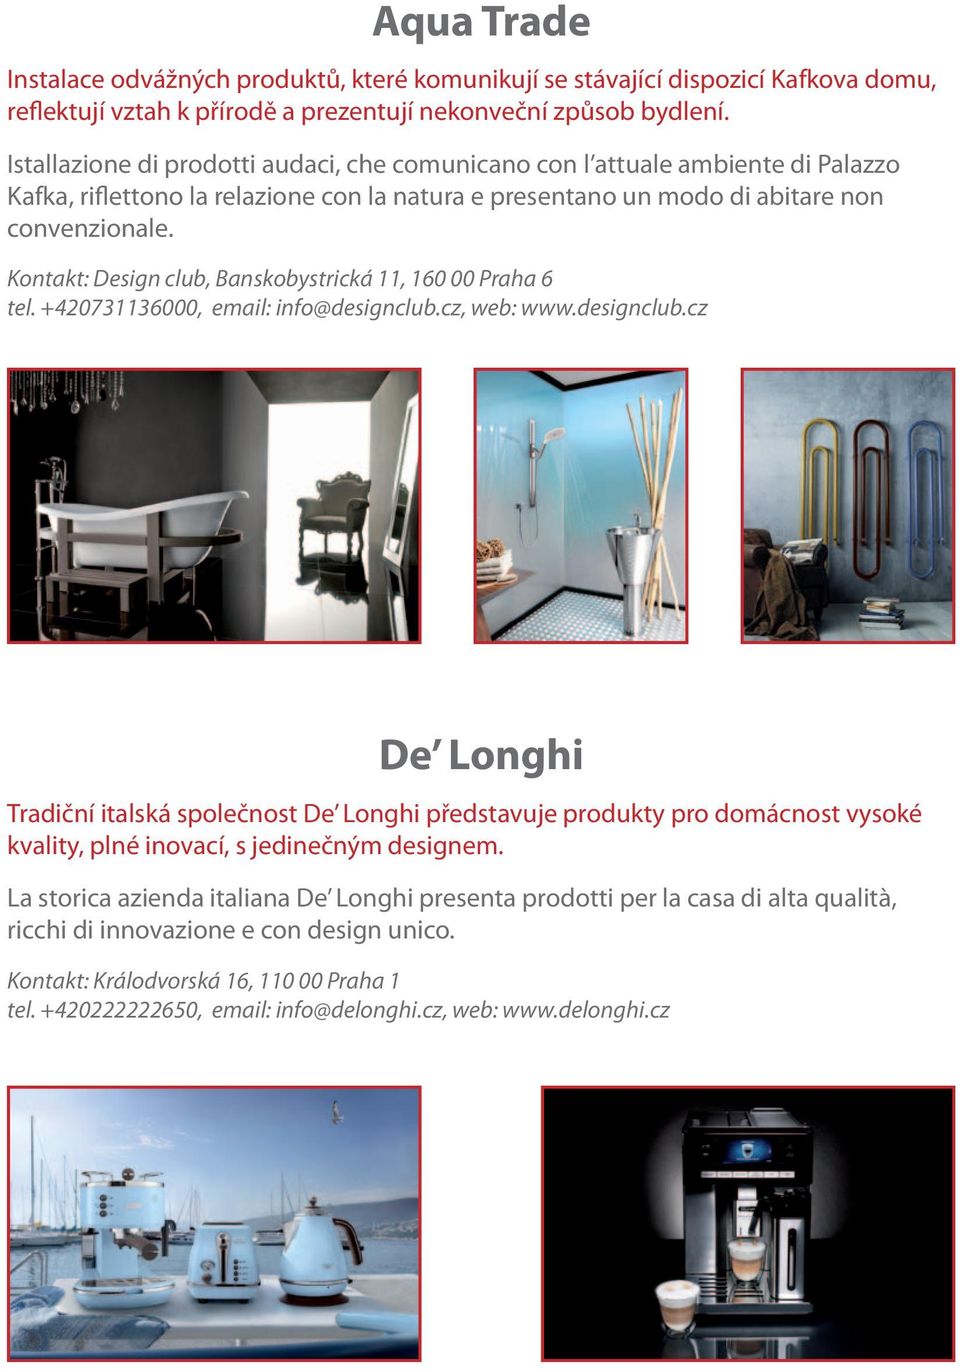 Kontakt: Design club, Banskobystrická 11, 160 00 Praha 6 tel. +420731136000, email: info@designclub.